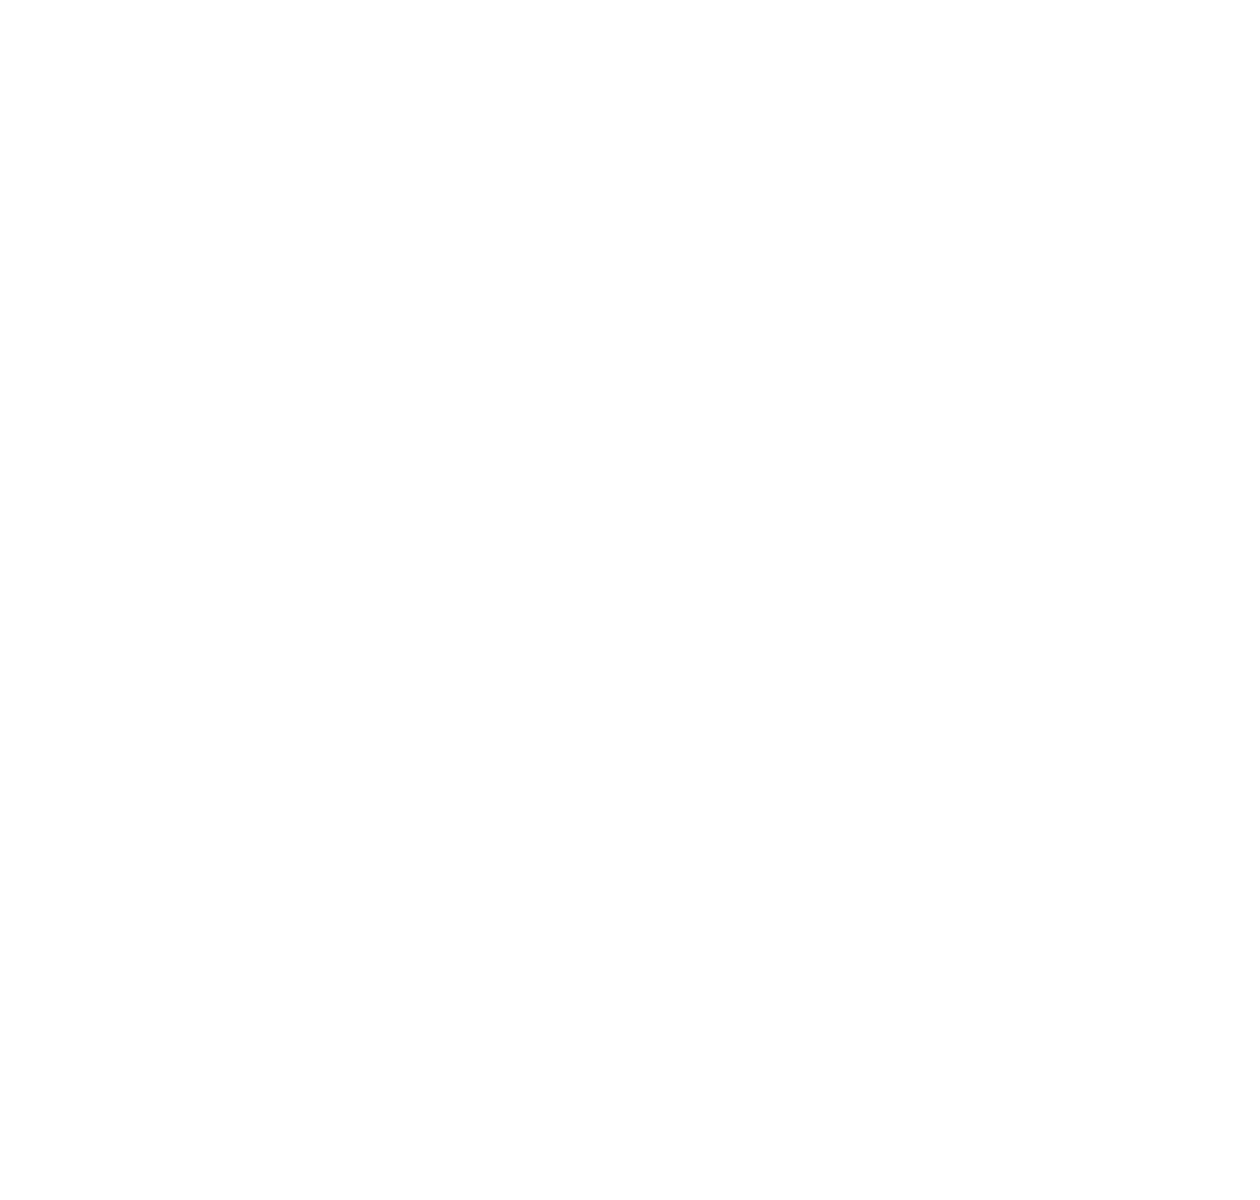 Abolition FAQ